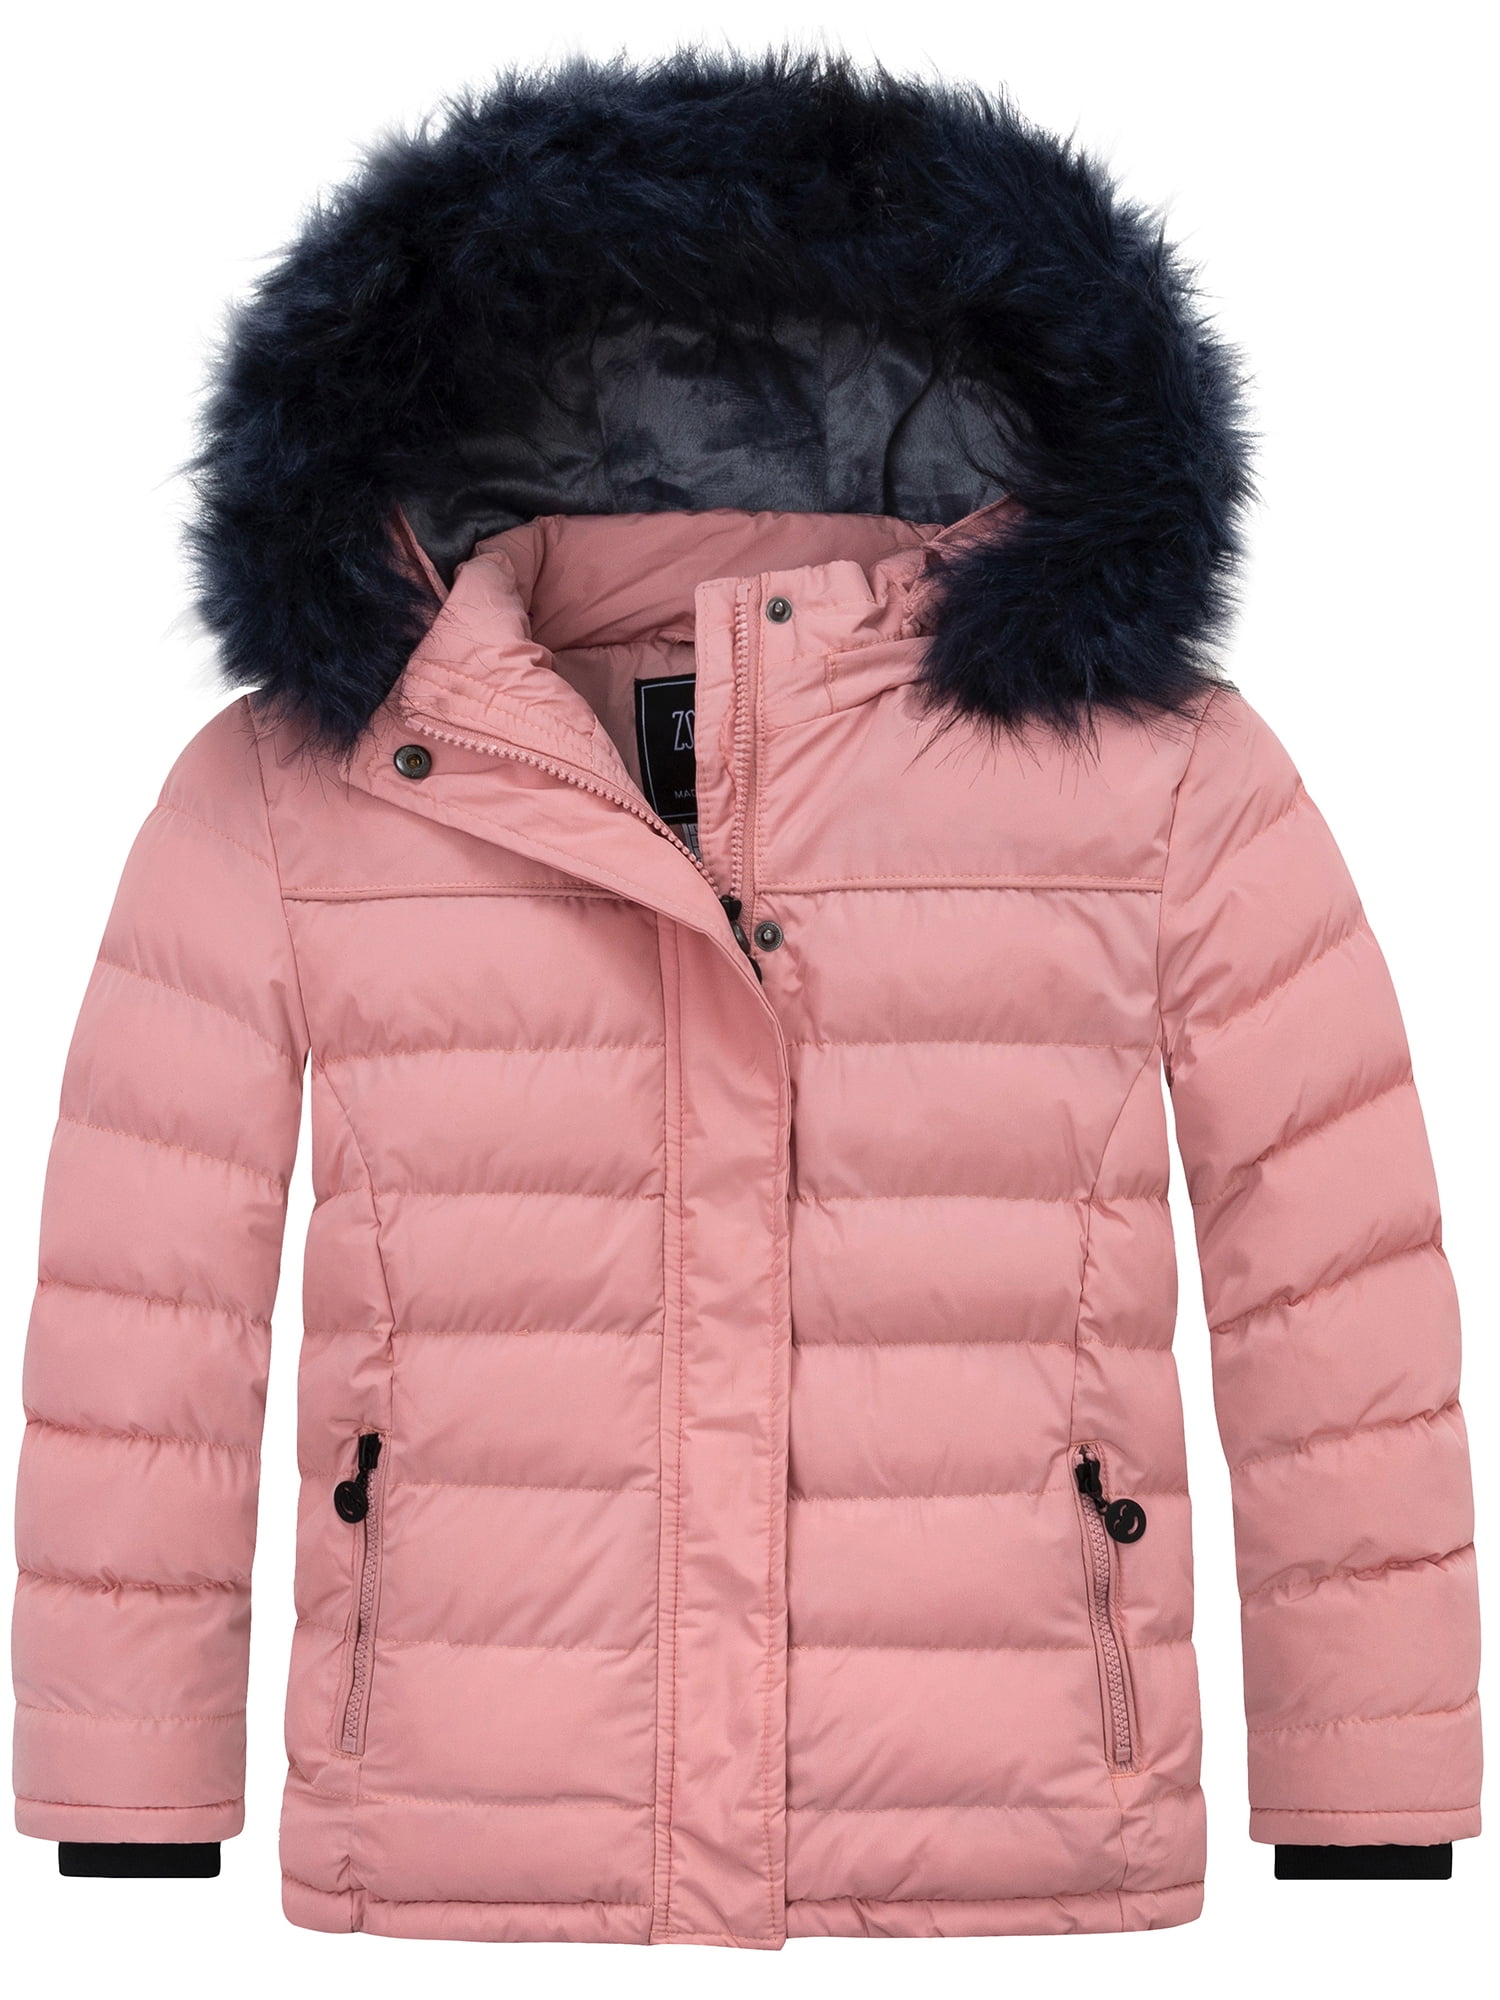 Pink Jacket Winter Puffy 14/16 Coral Jacket Windproof Girls\' Puffer Padded ZSHOW Coat Waterptproof